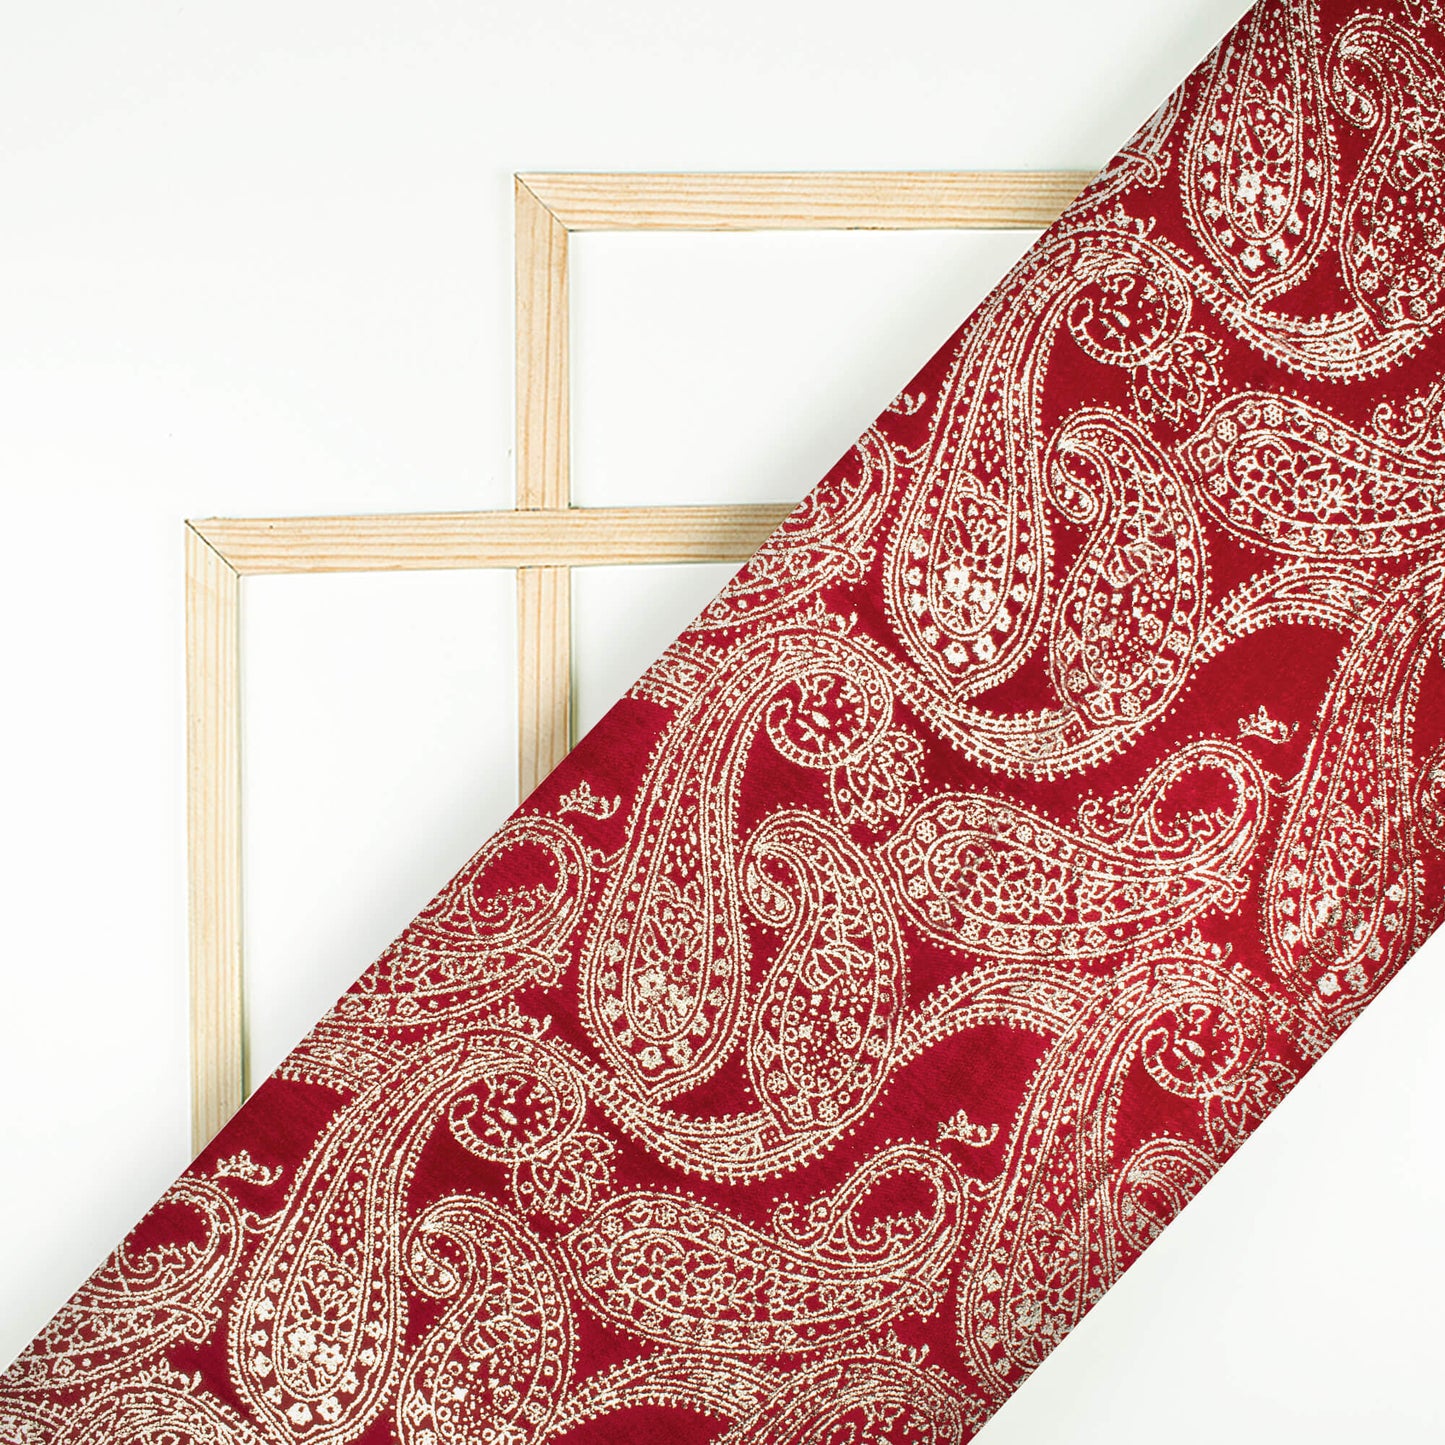 Red Paisley Pattern Golden Foil Print Export Quality Micro Velvet Fabric